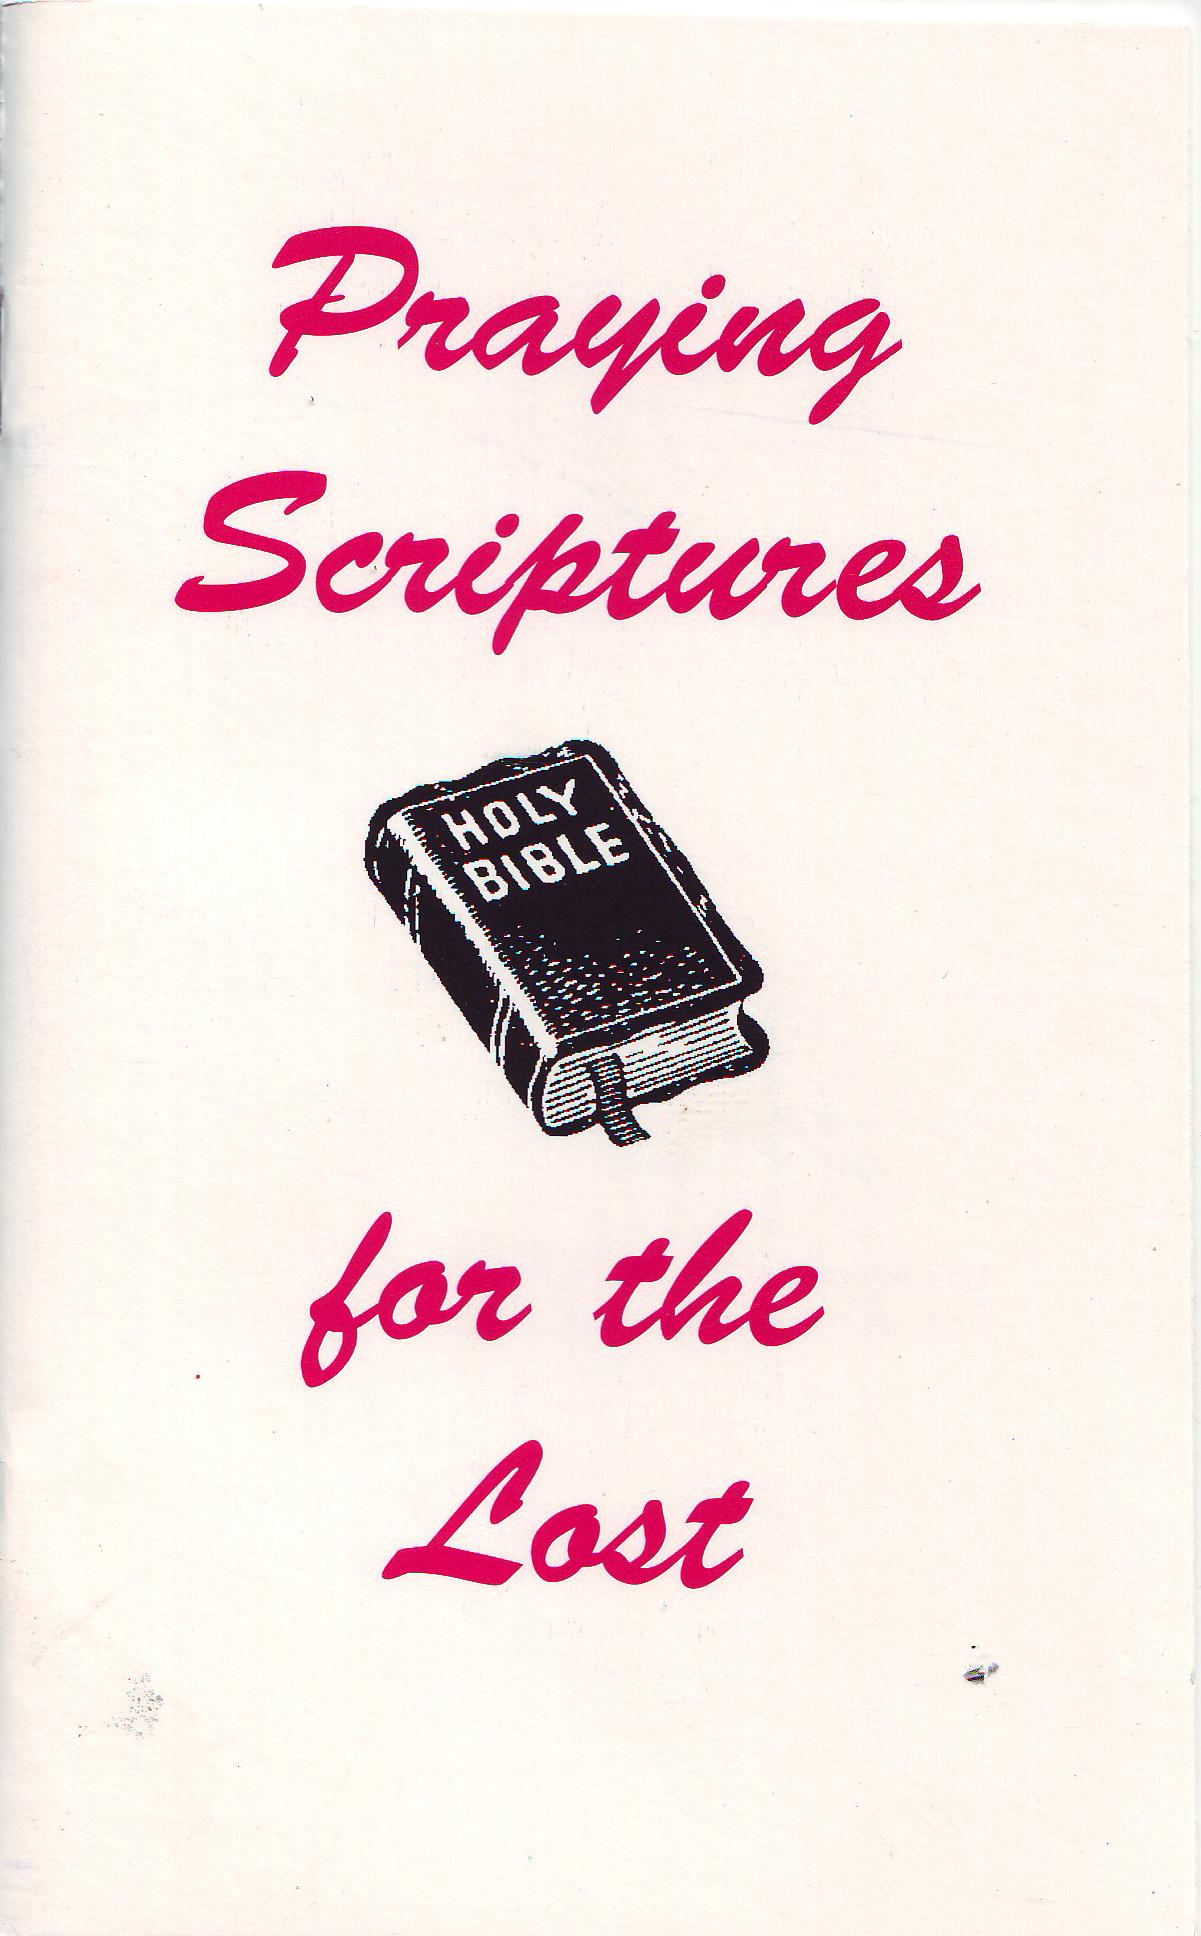 Scripture lost